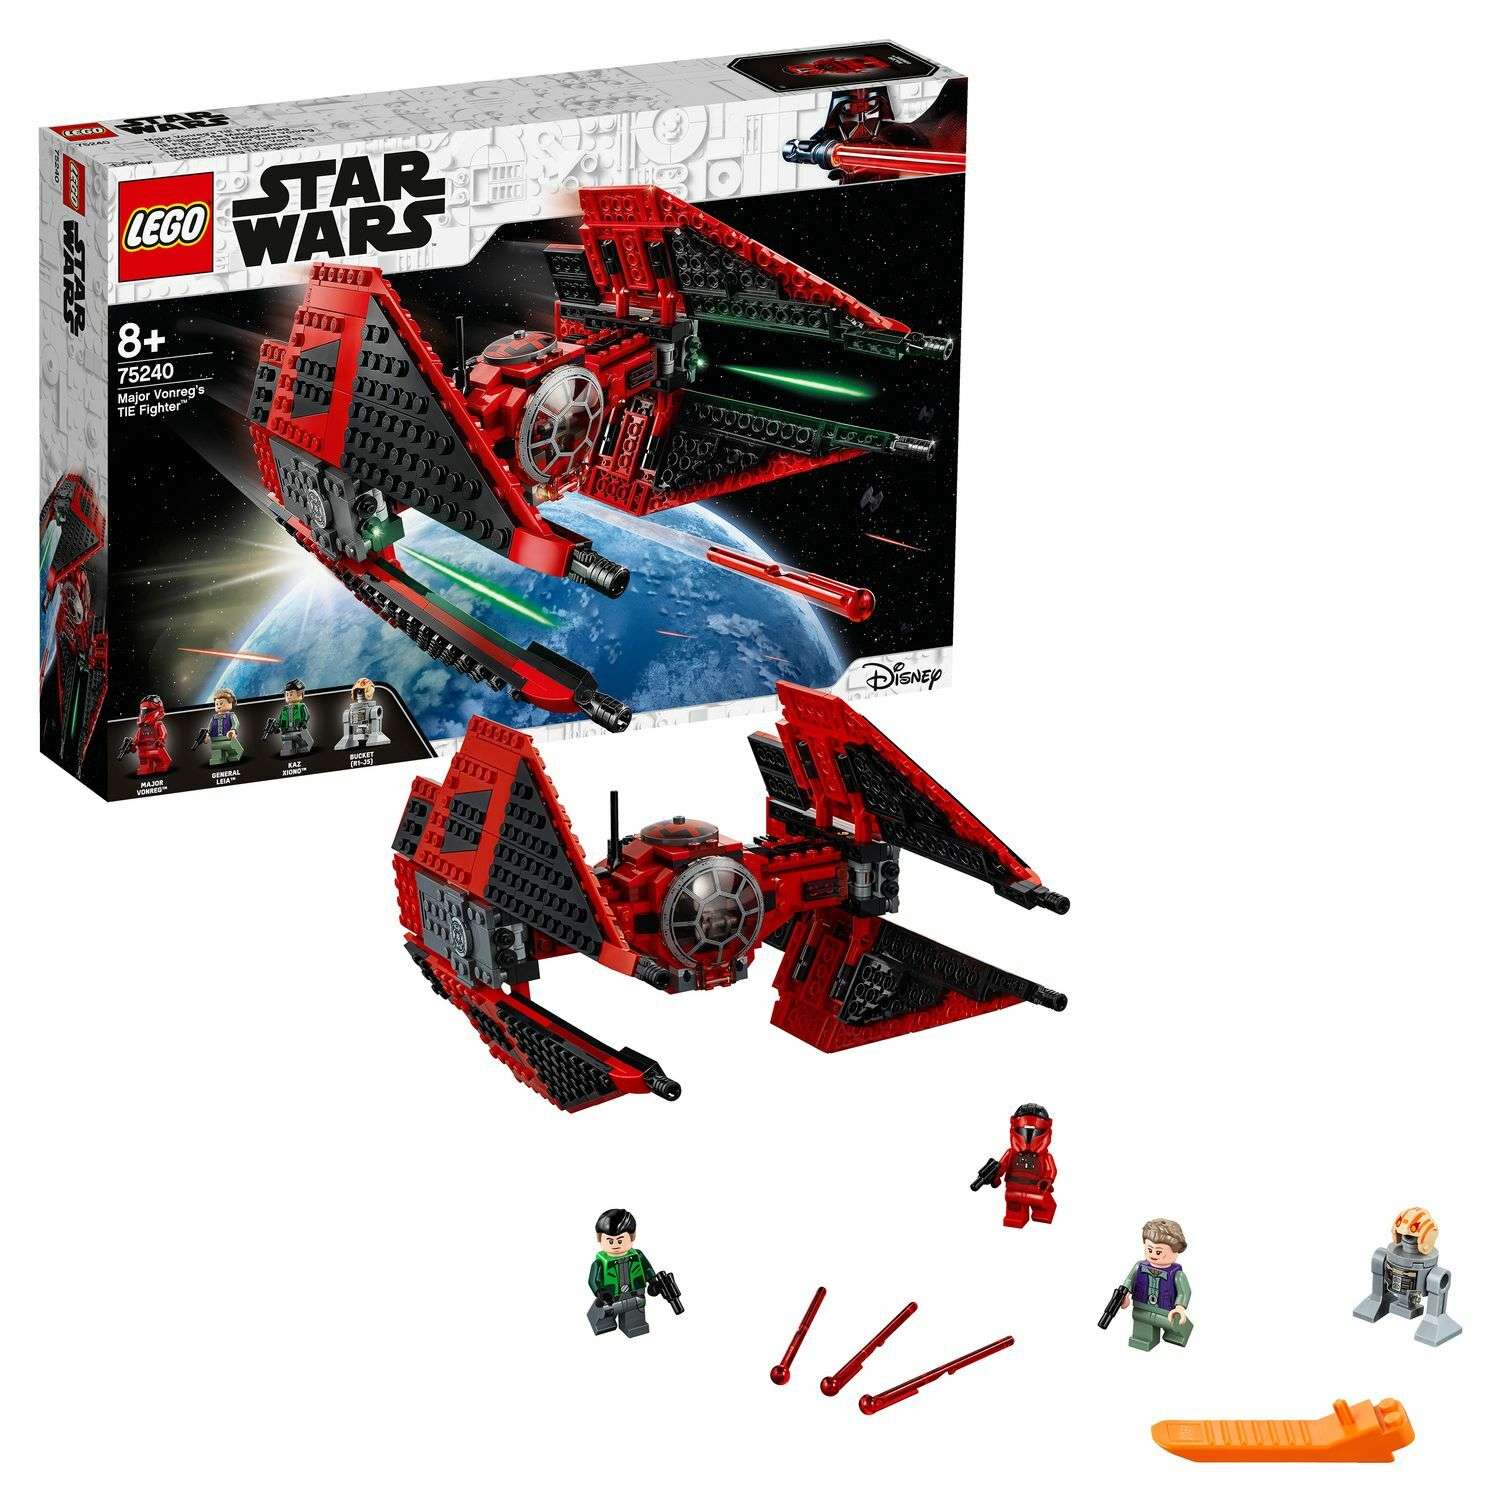 Конструктор LEGO Star Wars Истребитель СИД майора Вонрега 75240 - фото 1